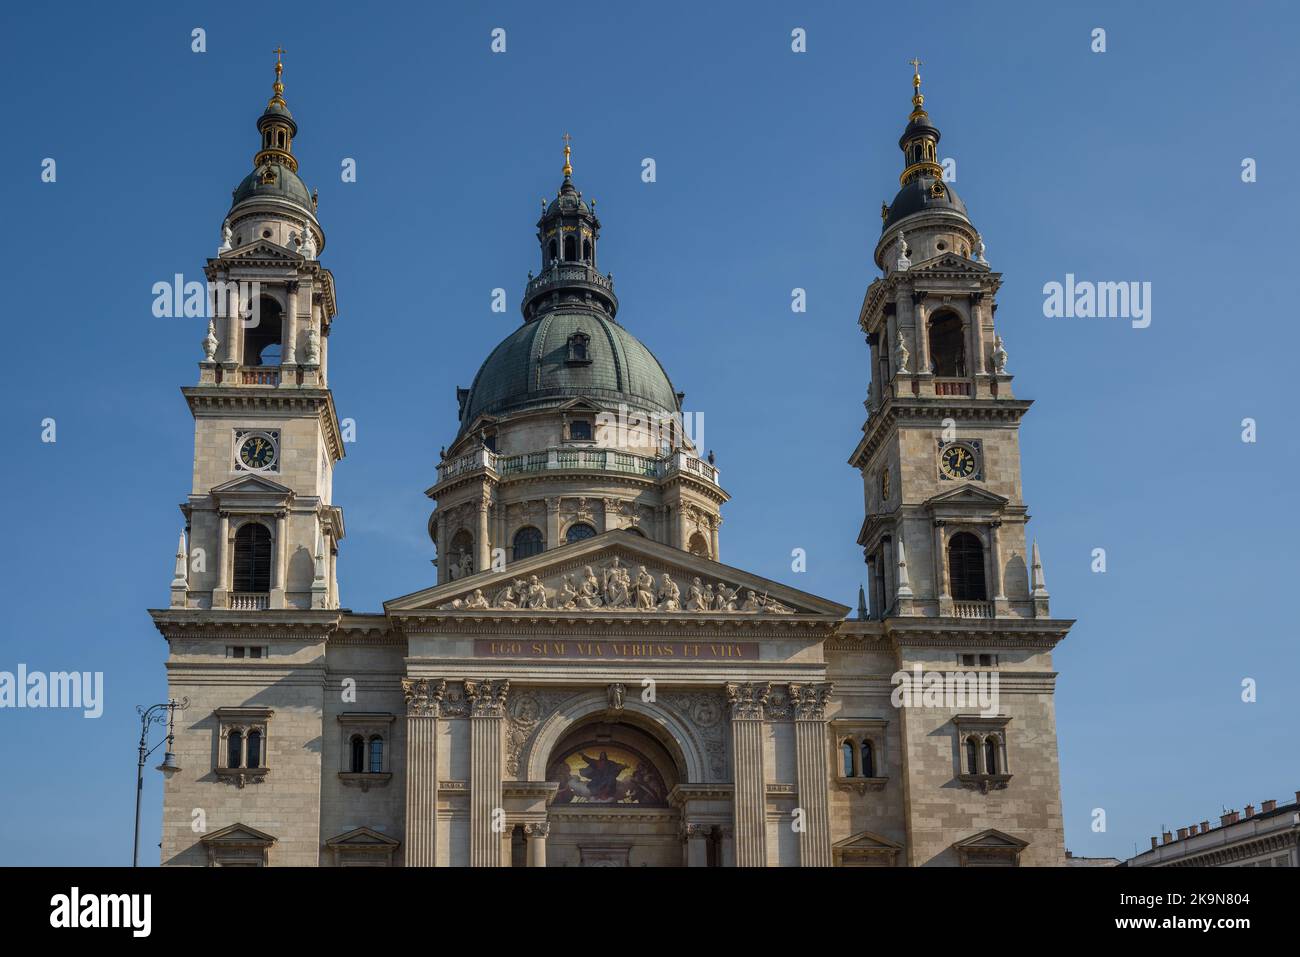 St. Stephen's Basilica - Budapest, Hungary Stock Photo